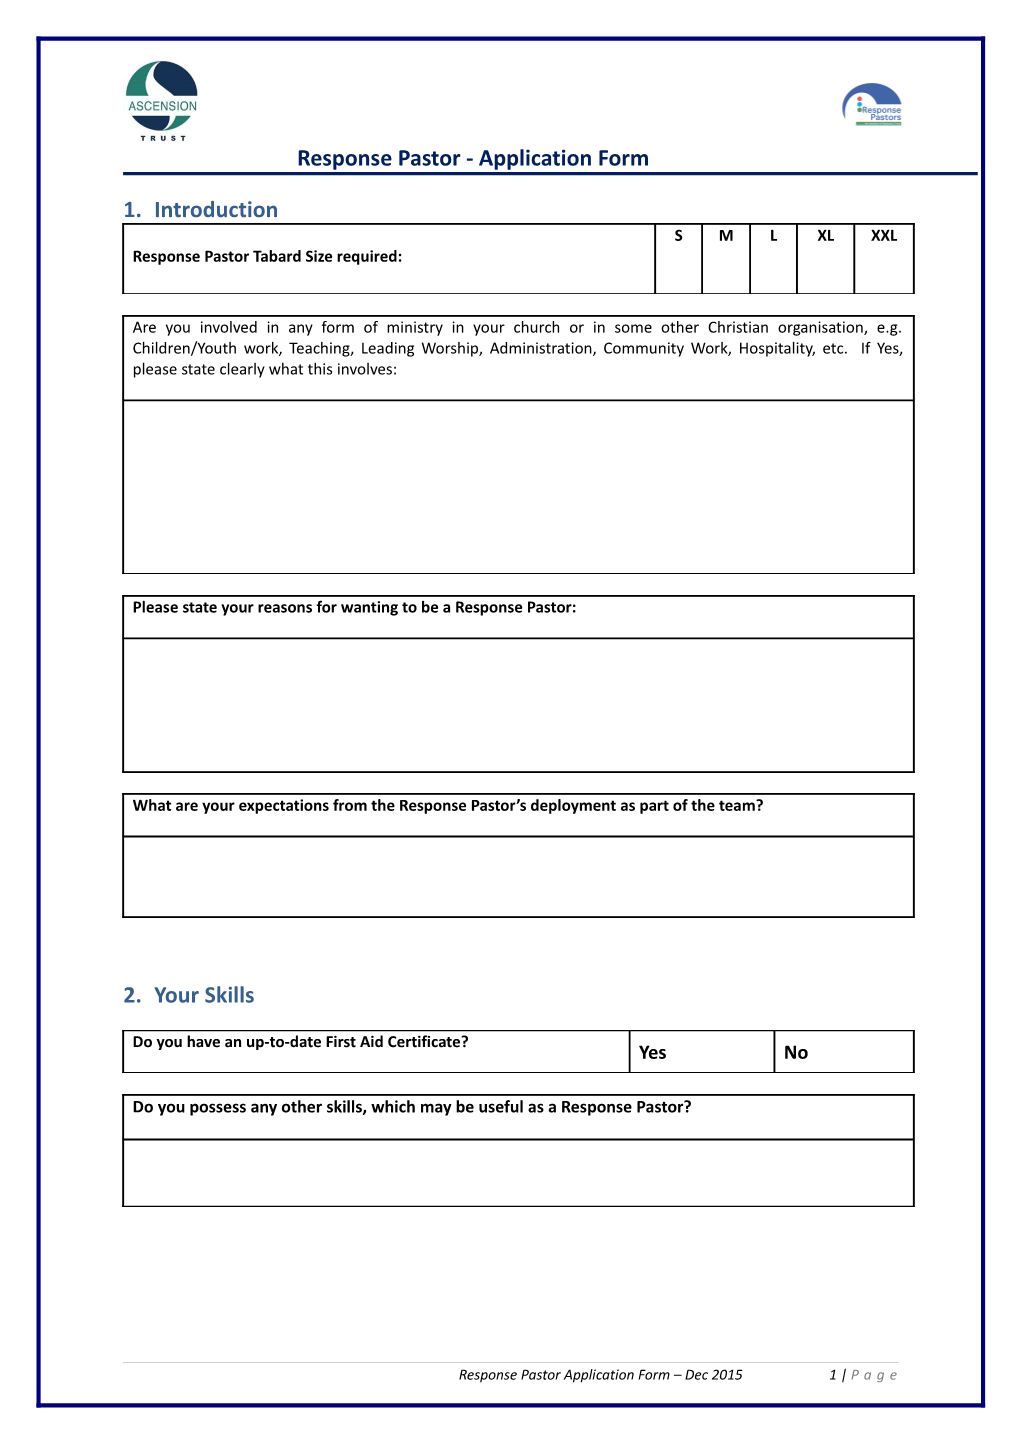 Response Pastor - Application Form